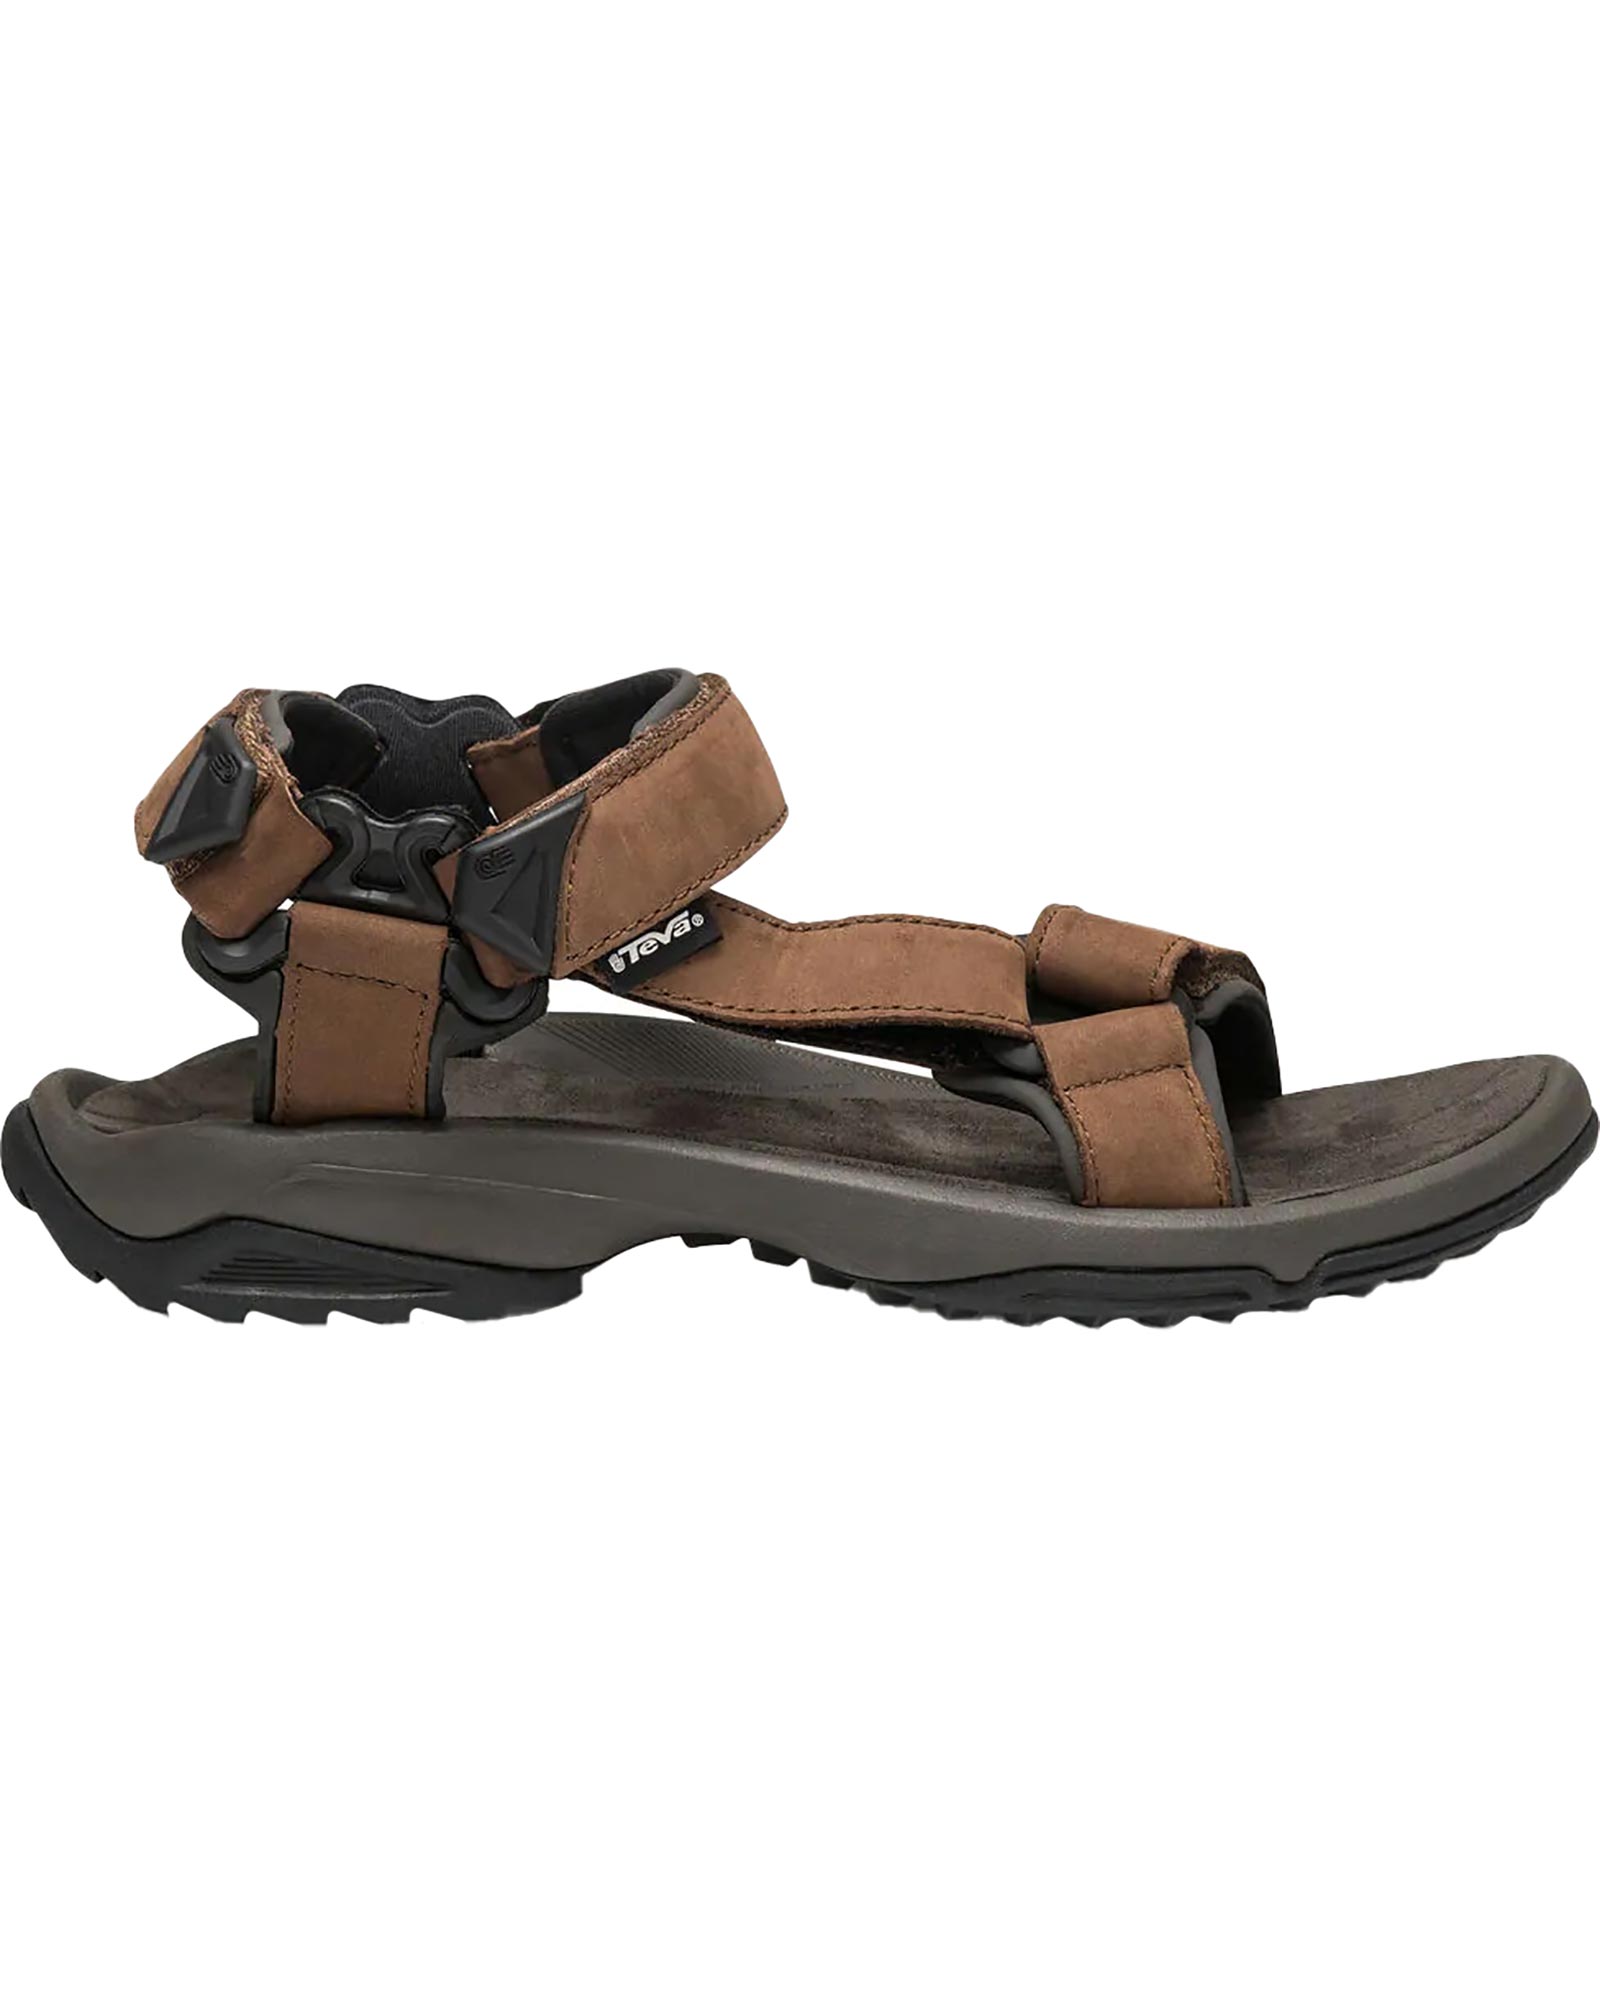 Teva Terra Fi Lite Men’s Leather Sandals - Brown UK 9